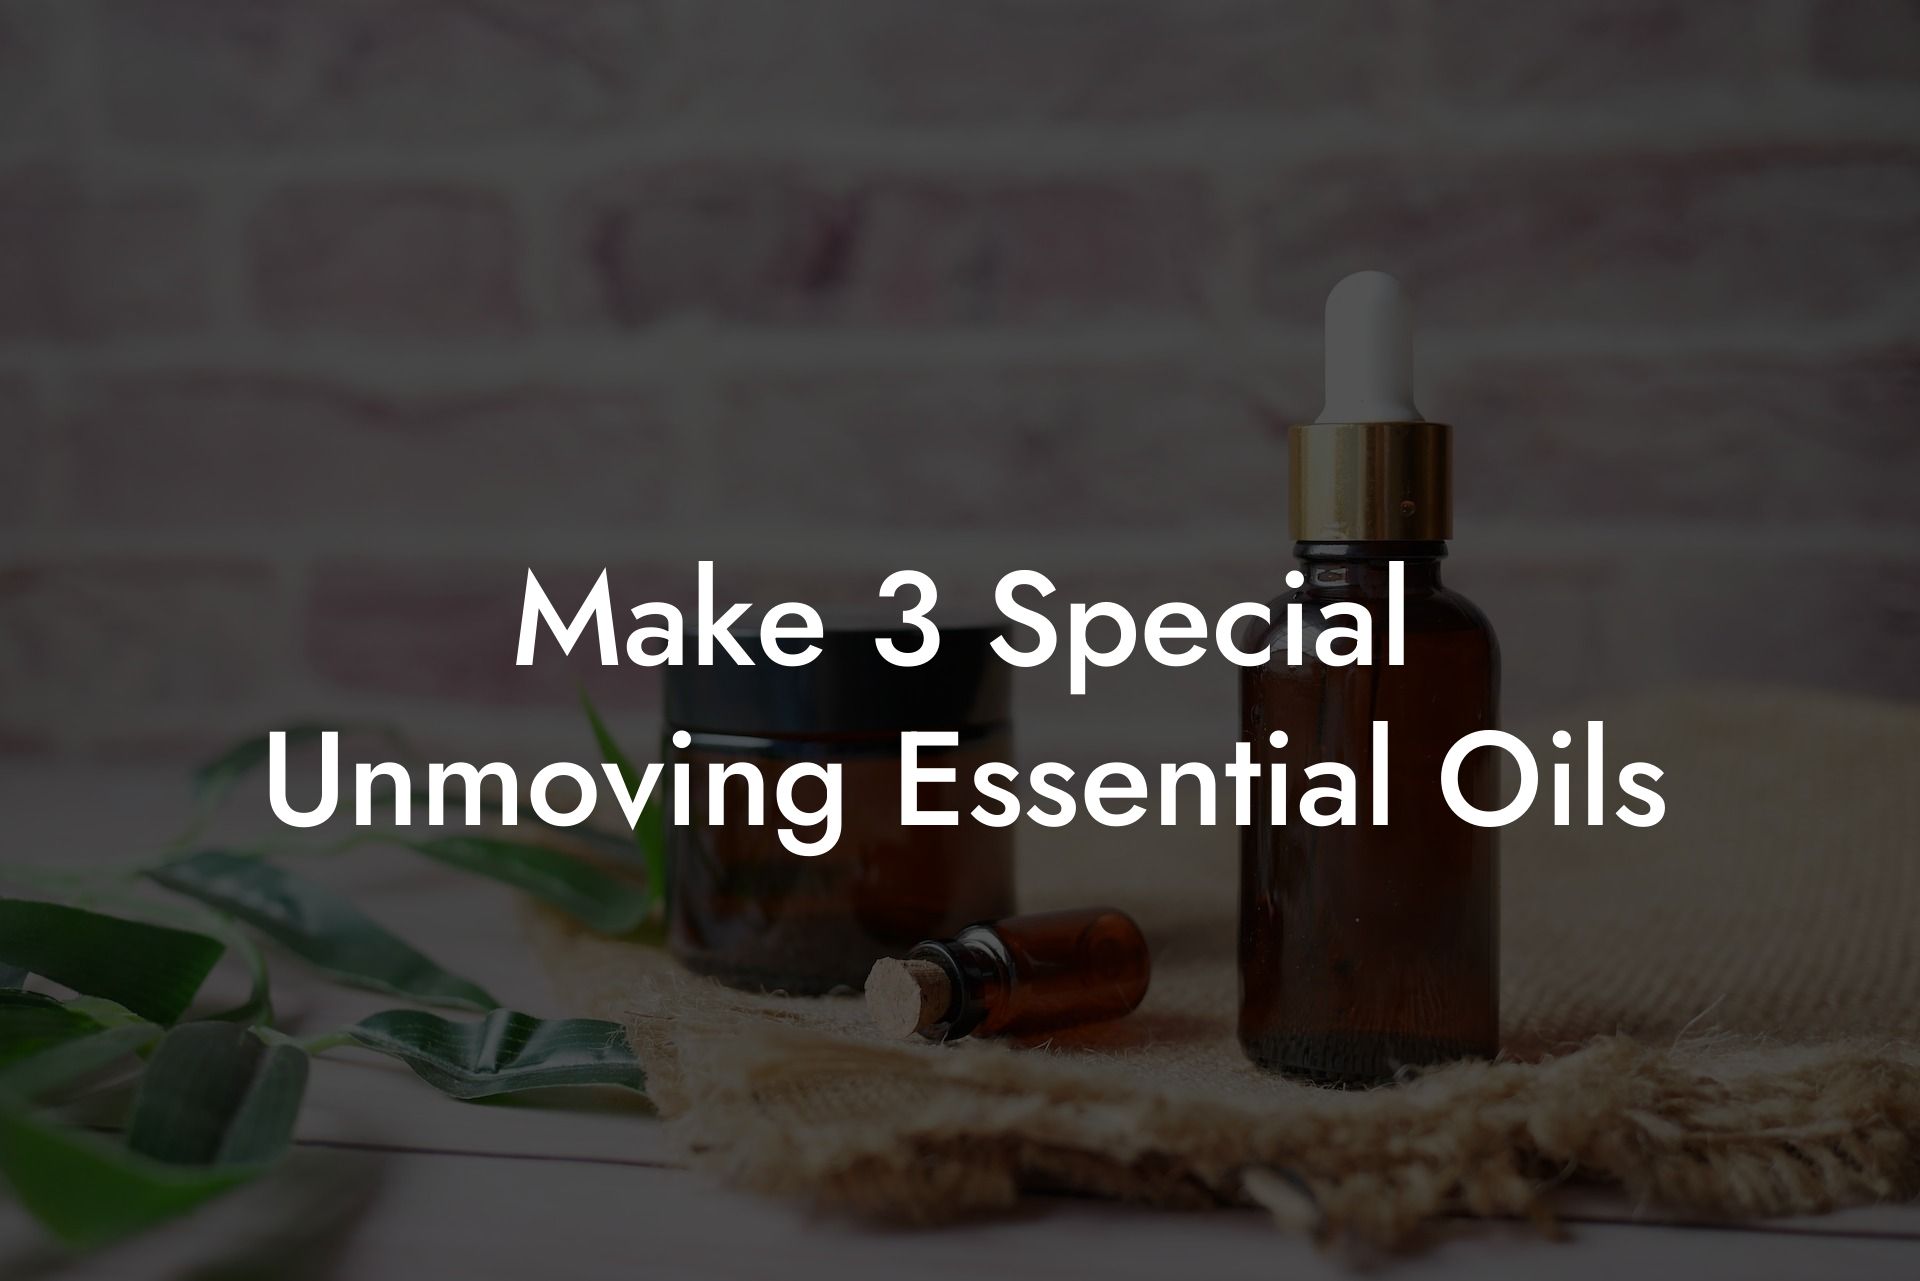 Make 3 Special Unmoving Essential Oils